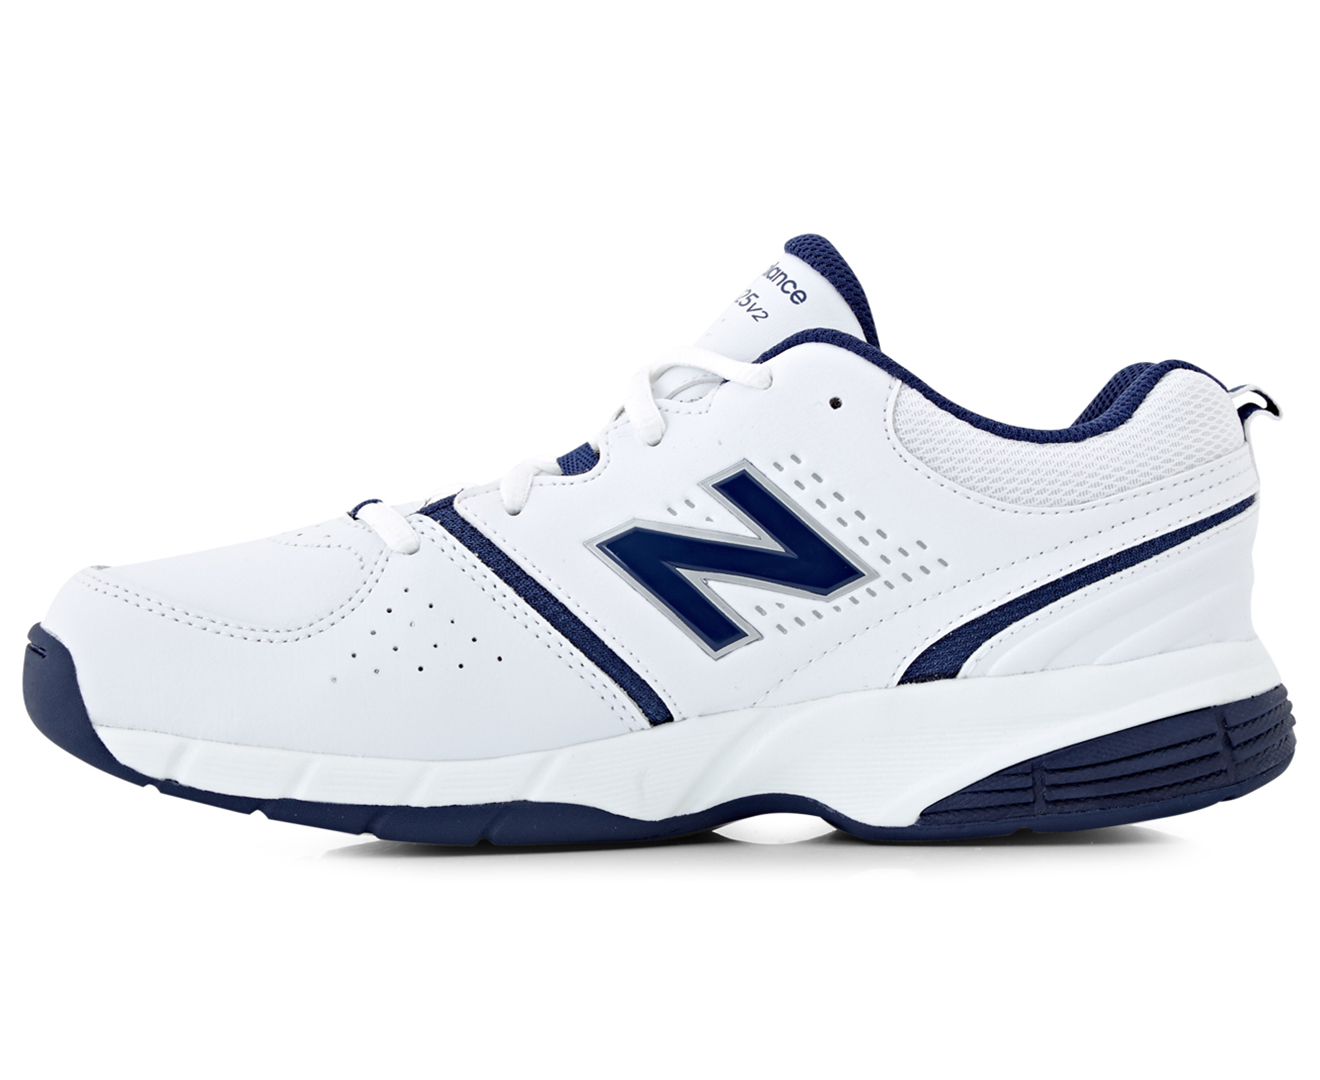 New Balance Boys' 625 Wide Fit Sports Shoes - White/Navy | Catch.com.au